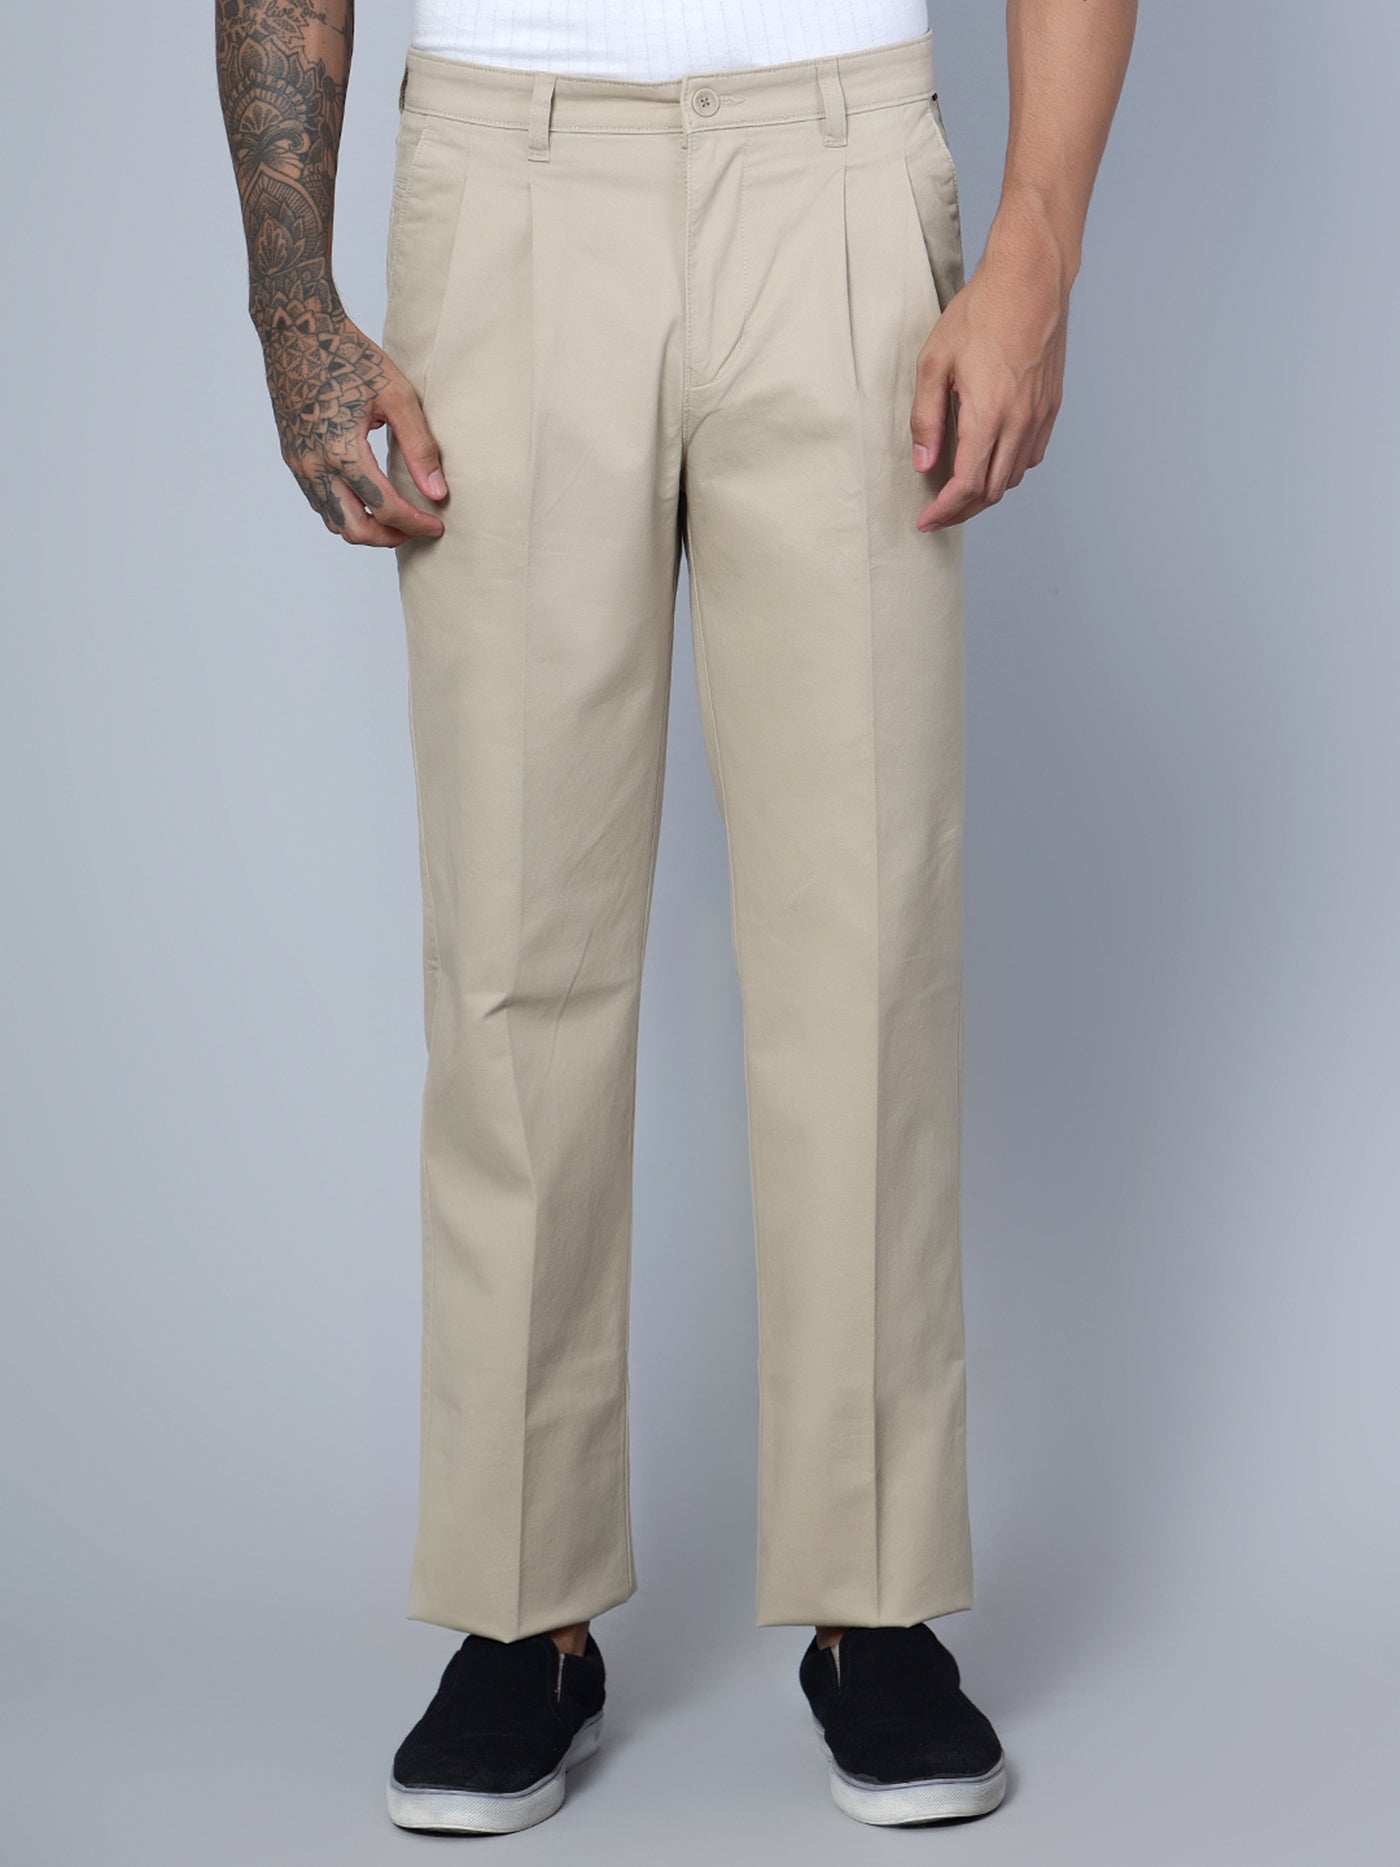 Plus Size Mens Formal Wear Regular Fit Ankle Length Gray Plain 100 Cotton  Pant at Best Price in Kolkata  Gupta Traders